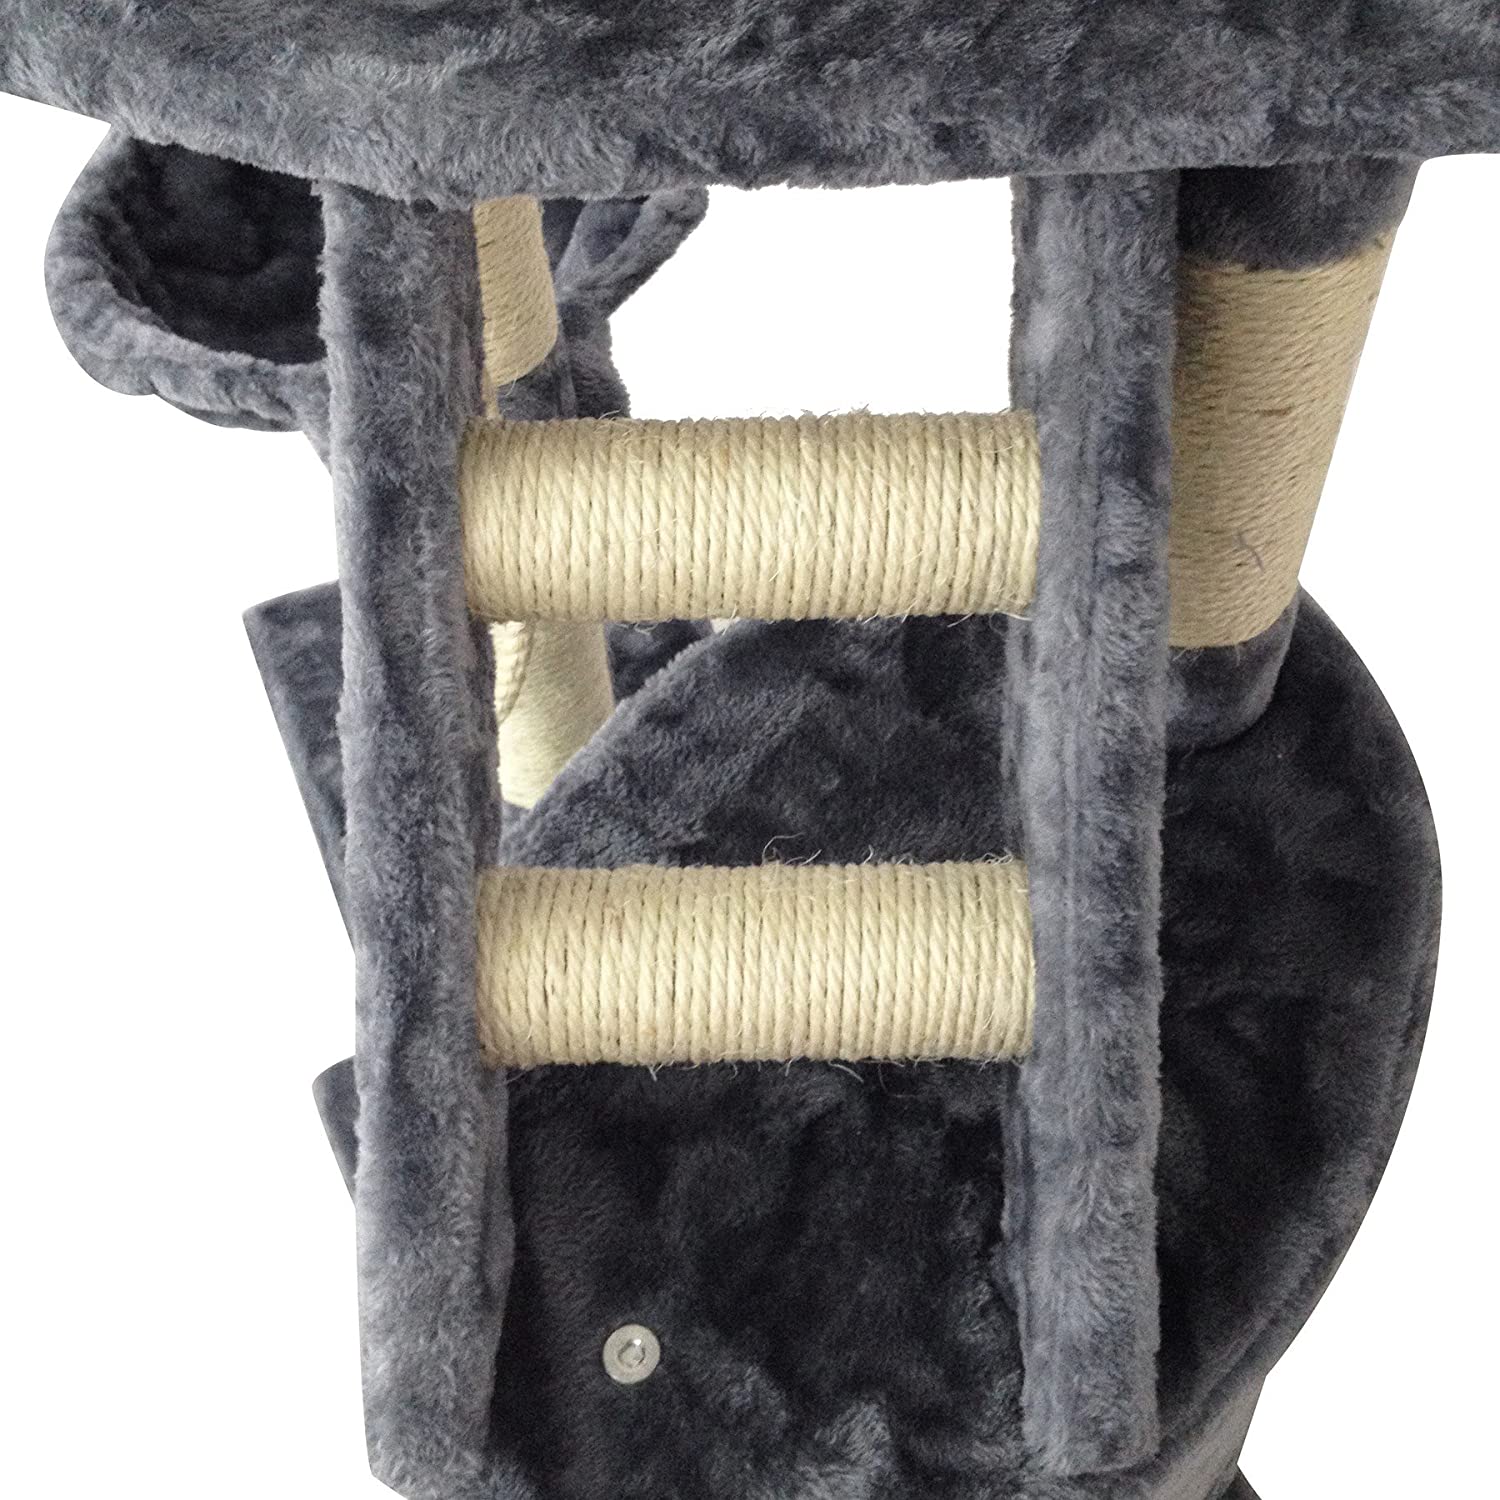  Todeco - Árbol para Gatos, Escalador para Gatos - Material: MDF - Tamaño de la casa de Gato: 30,0 x 30,0 x 42,9 cm - 120 cm, 5 Plataformas, Gris 